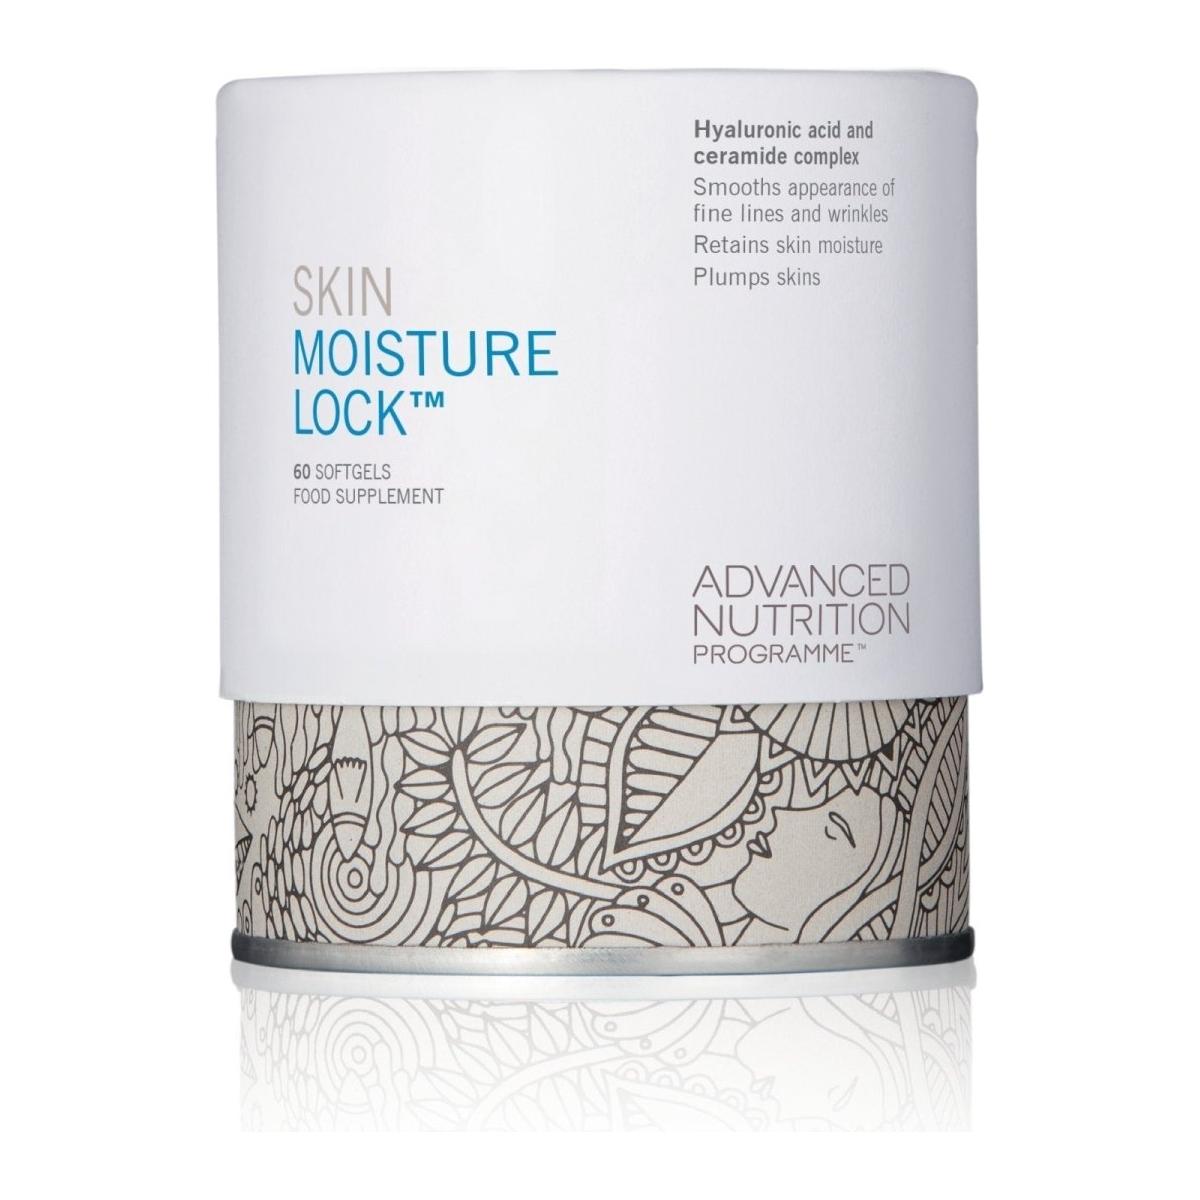 Advanced Nutrition Programme | Skin Moisture Lock | 60 caps - DG International Ventures Limited